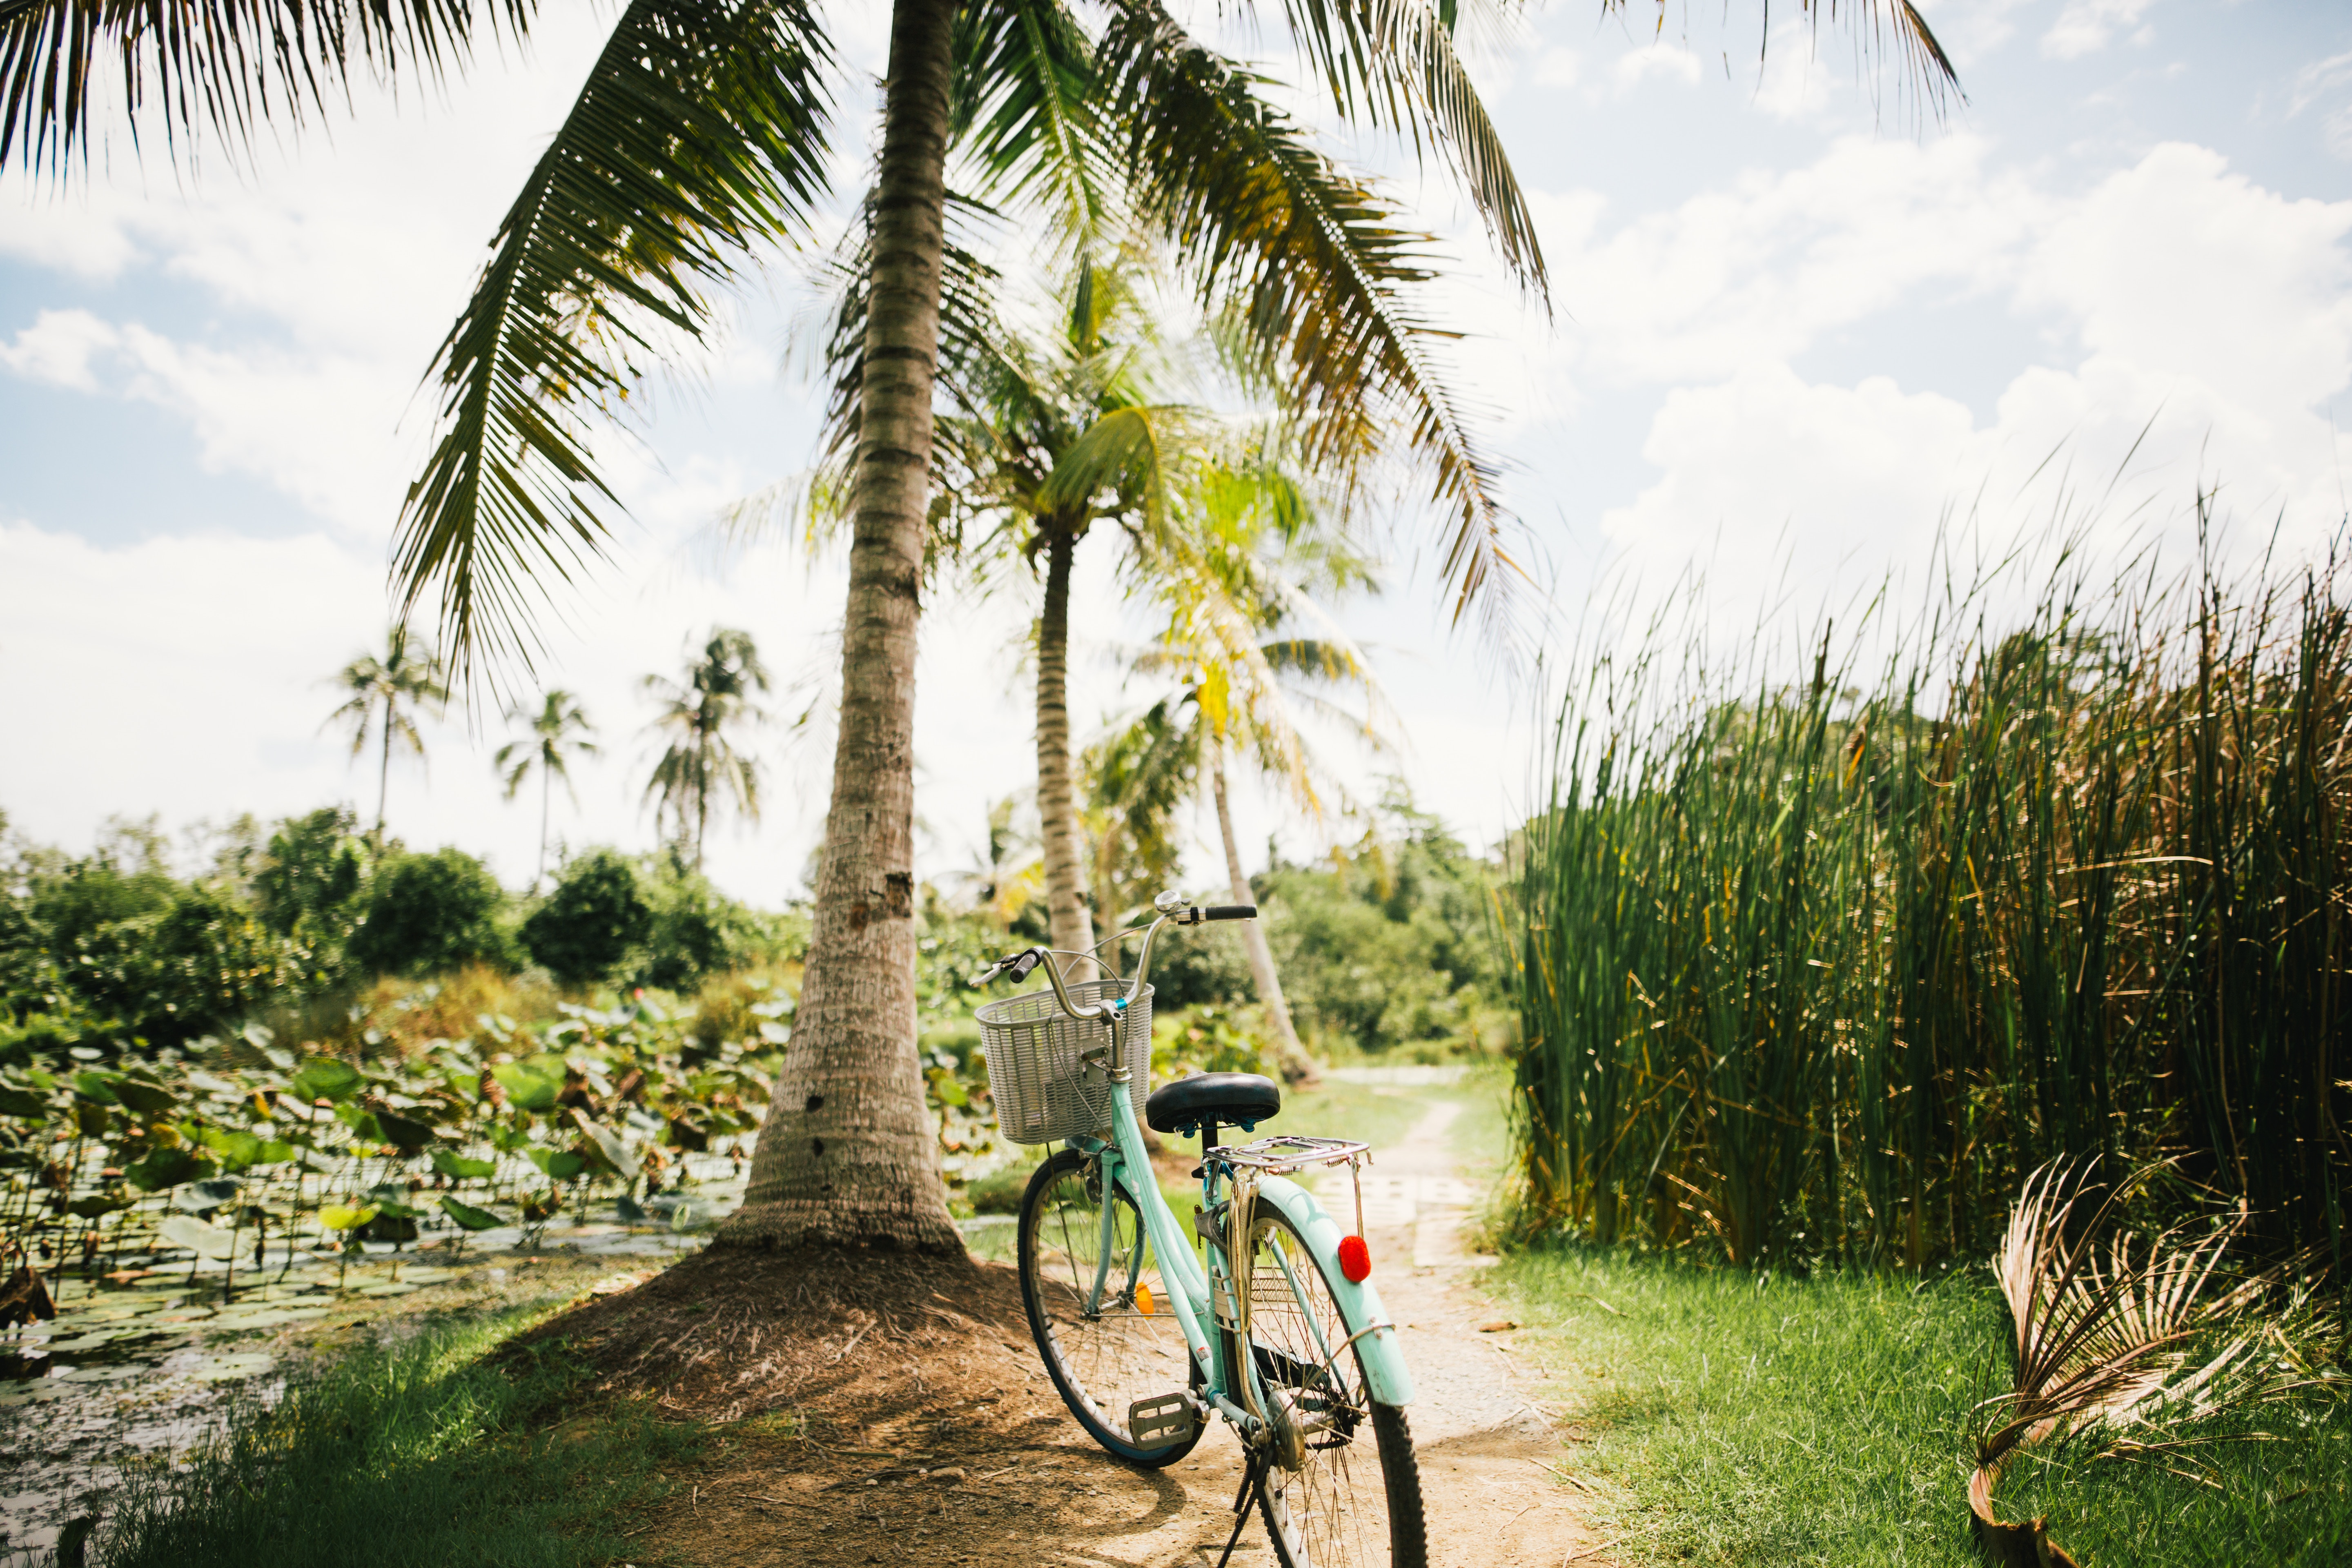 tropics, palms, miscellanea, miscellaneous, sunlight, bicycle iphone wallpaper